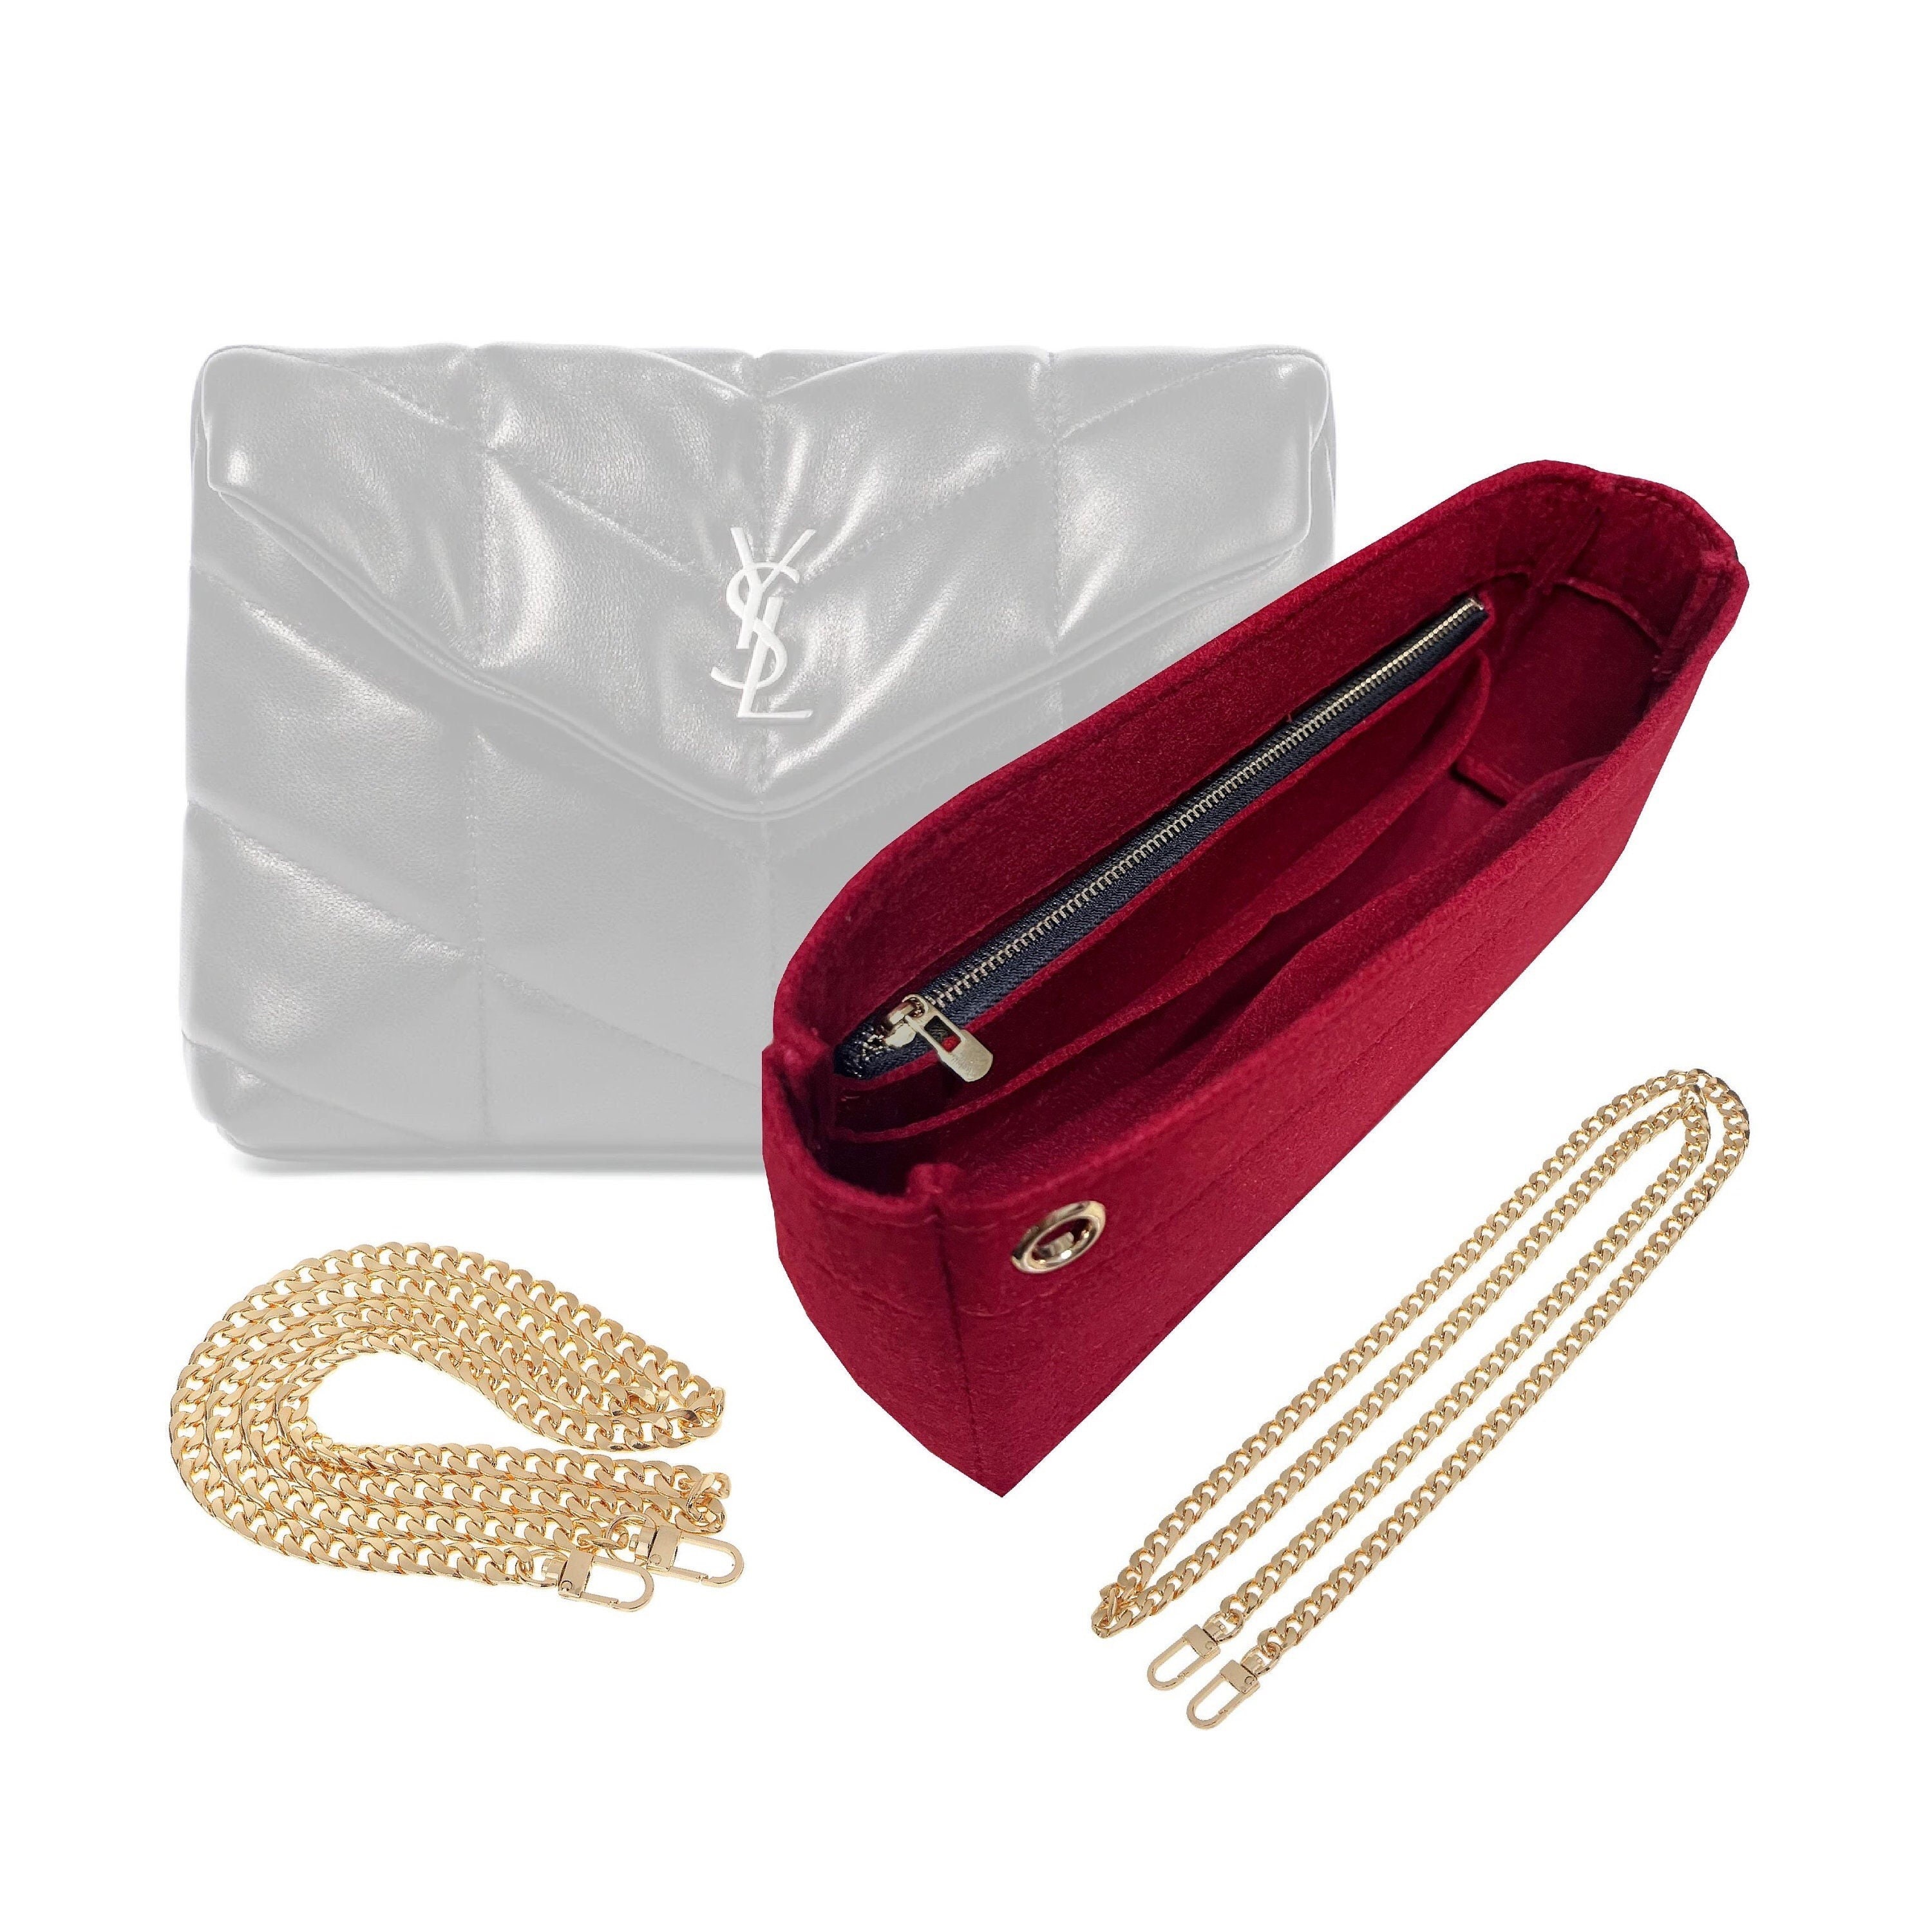 From HER Uptown Purse Organizer Insert Conversion Kit with Gold Chain Felt  Handbag (Beige)